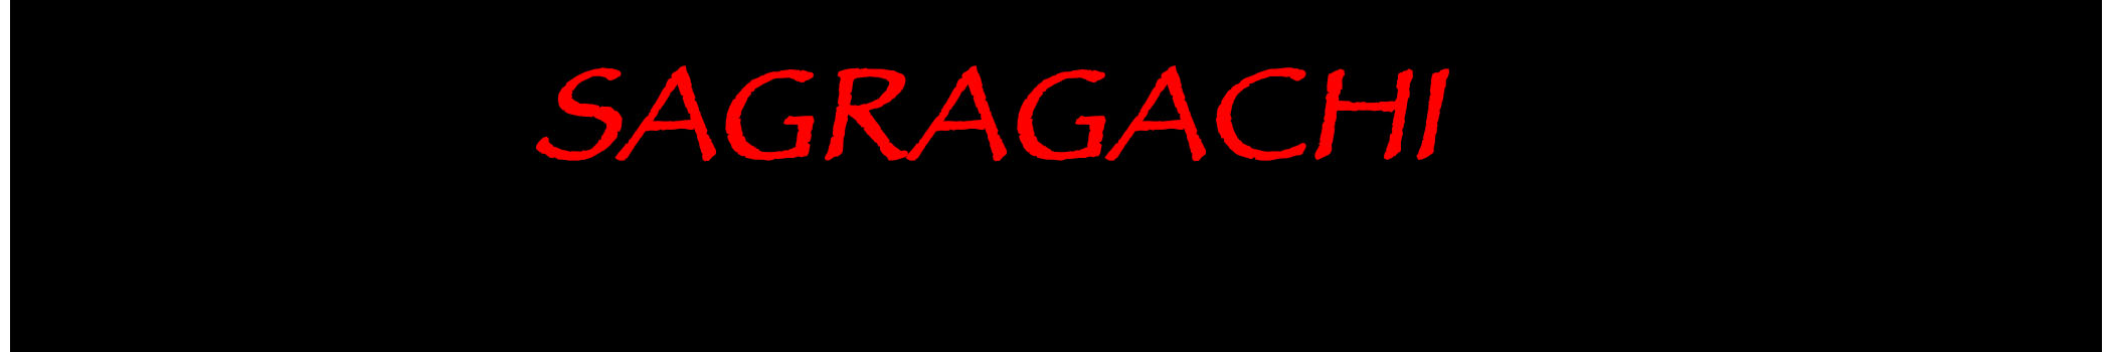 Sagragachi